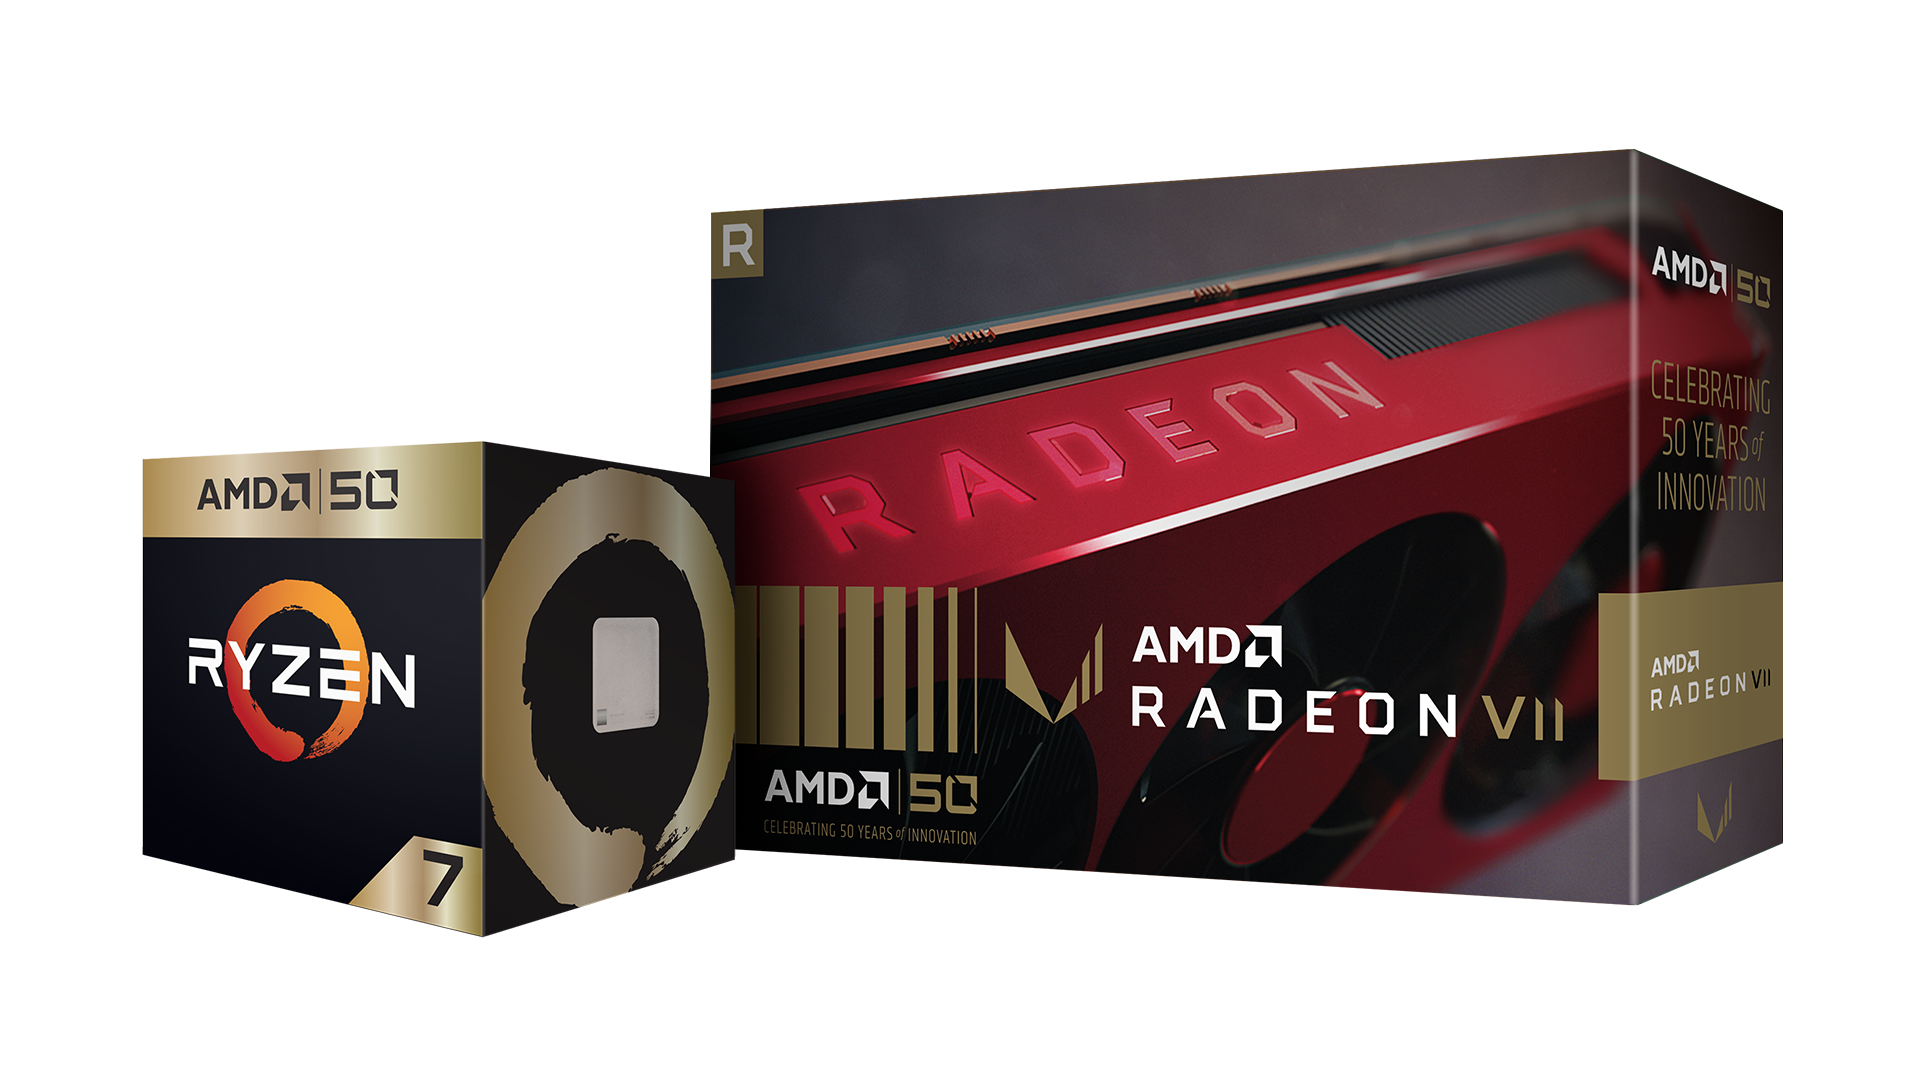 AMD_Ryzen_7_2700X_and_AMD_Radeon_VII_Gold Edition_Packagin